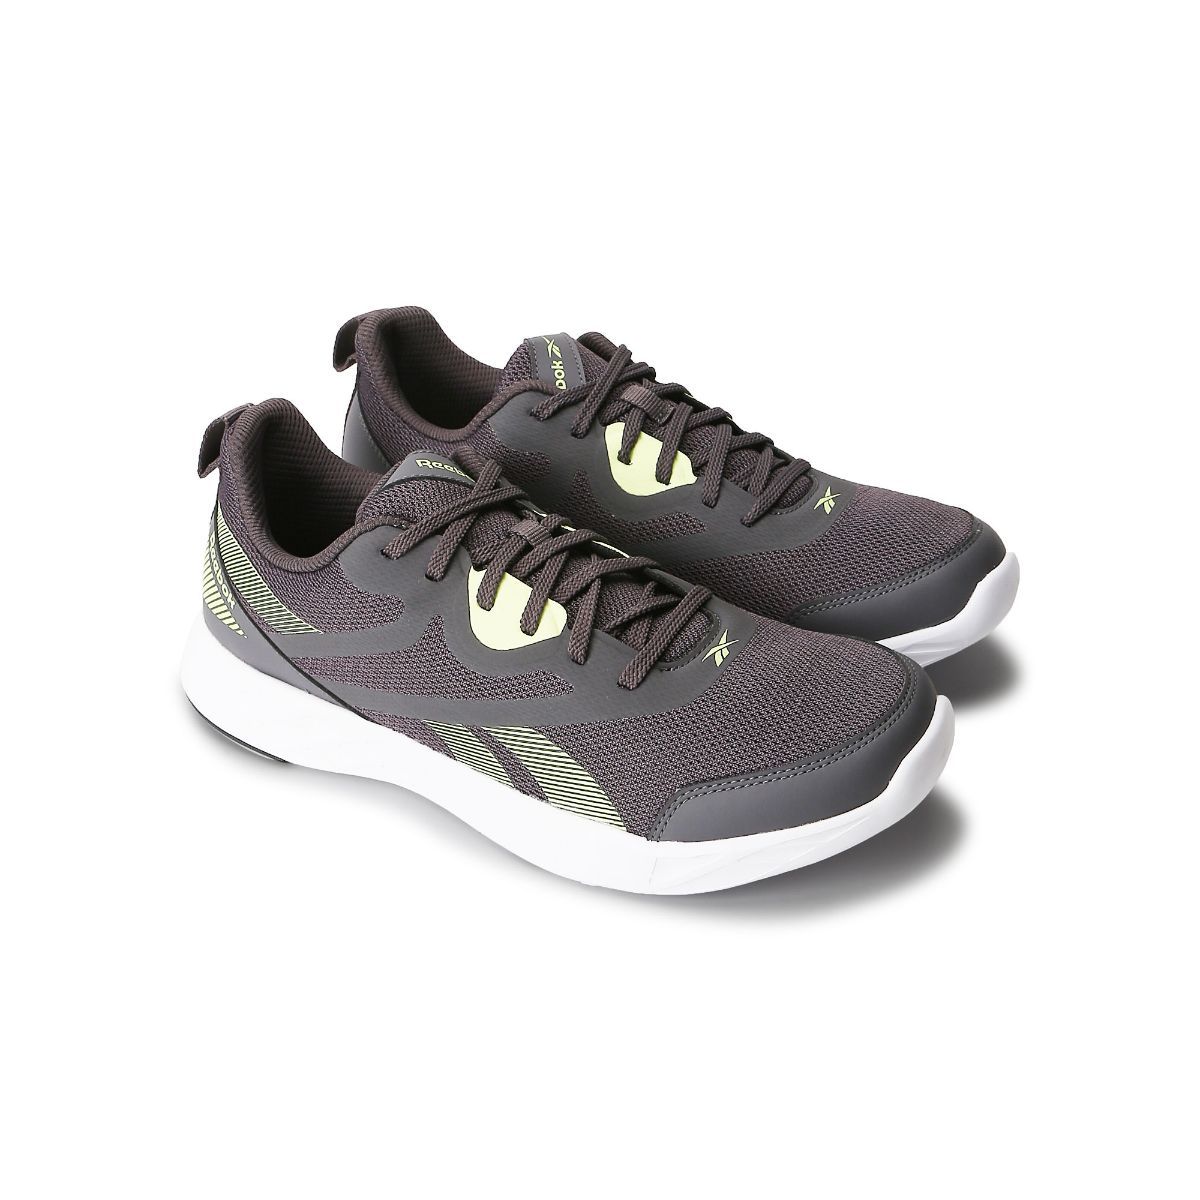 Reebok Thunderwatch Grey Running Shoes (UK 7)